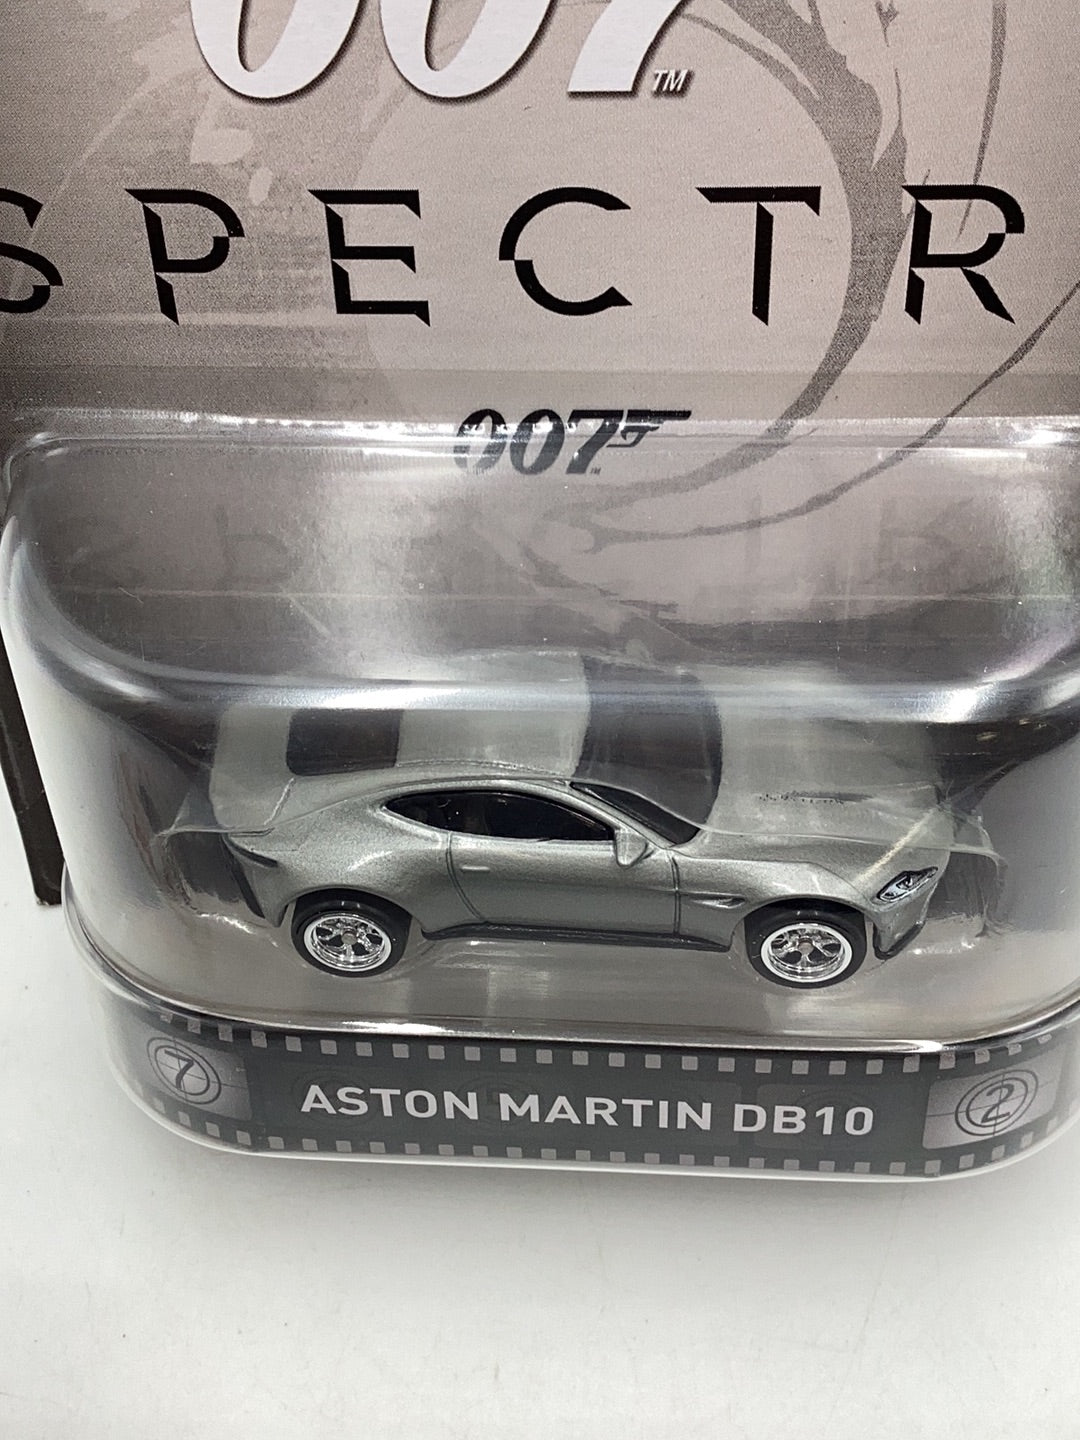 2016 hot wheels retro entertainment 007 Spectre Aston Martin DB10 261F